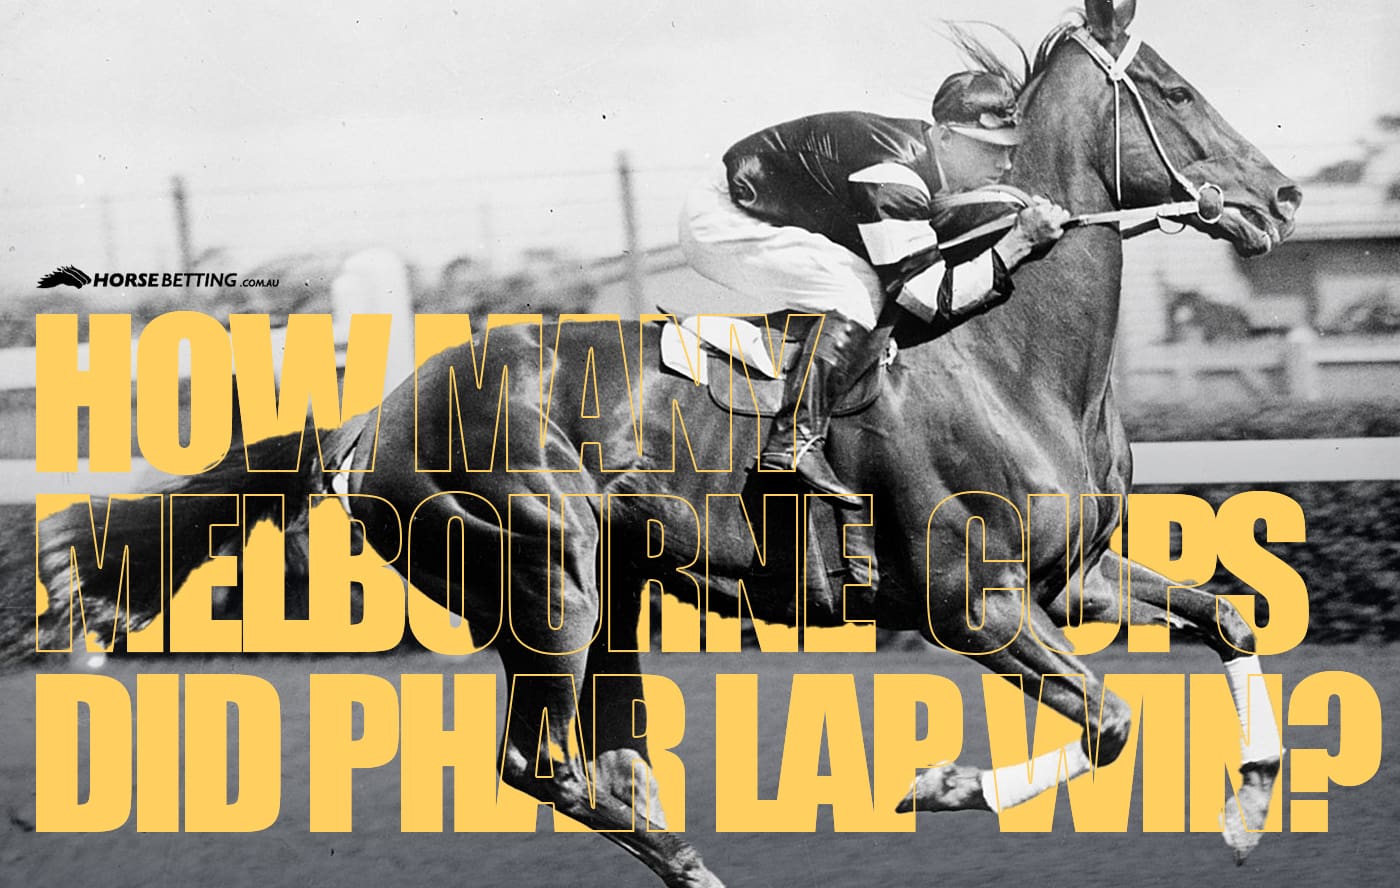 Phar Lap - Great Australian racehorses